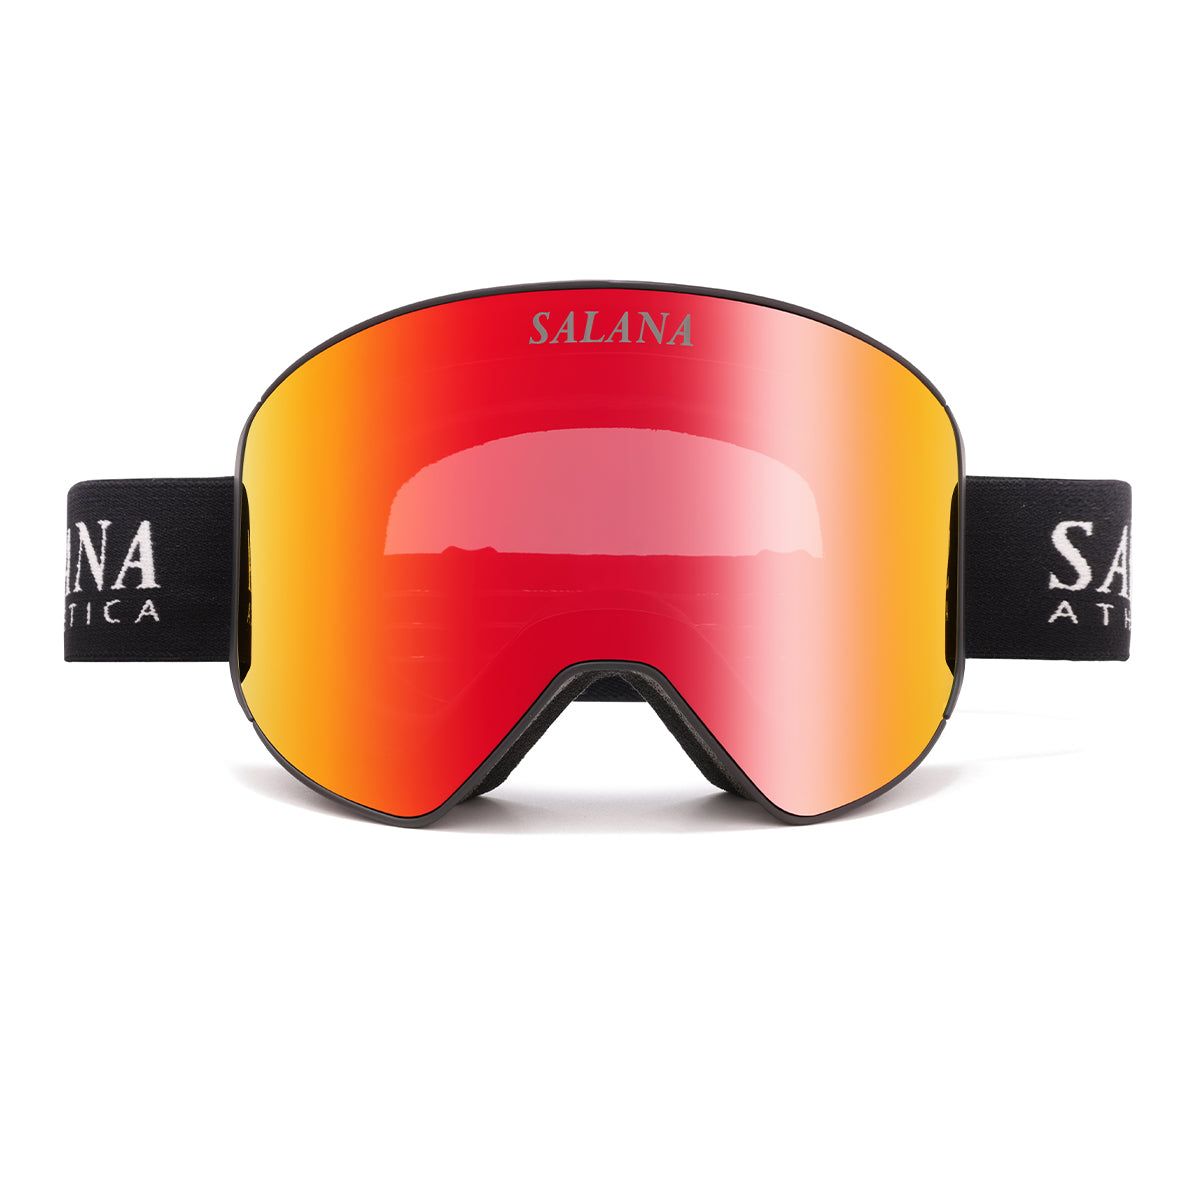 Salana ski snowboard goggles - mirrored orange